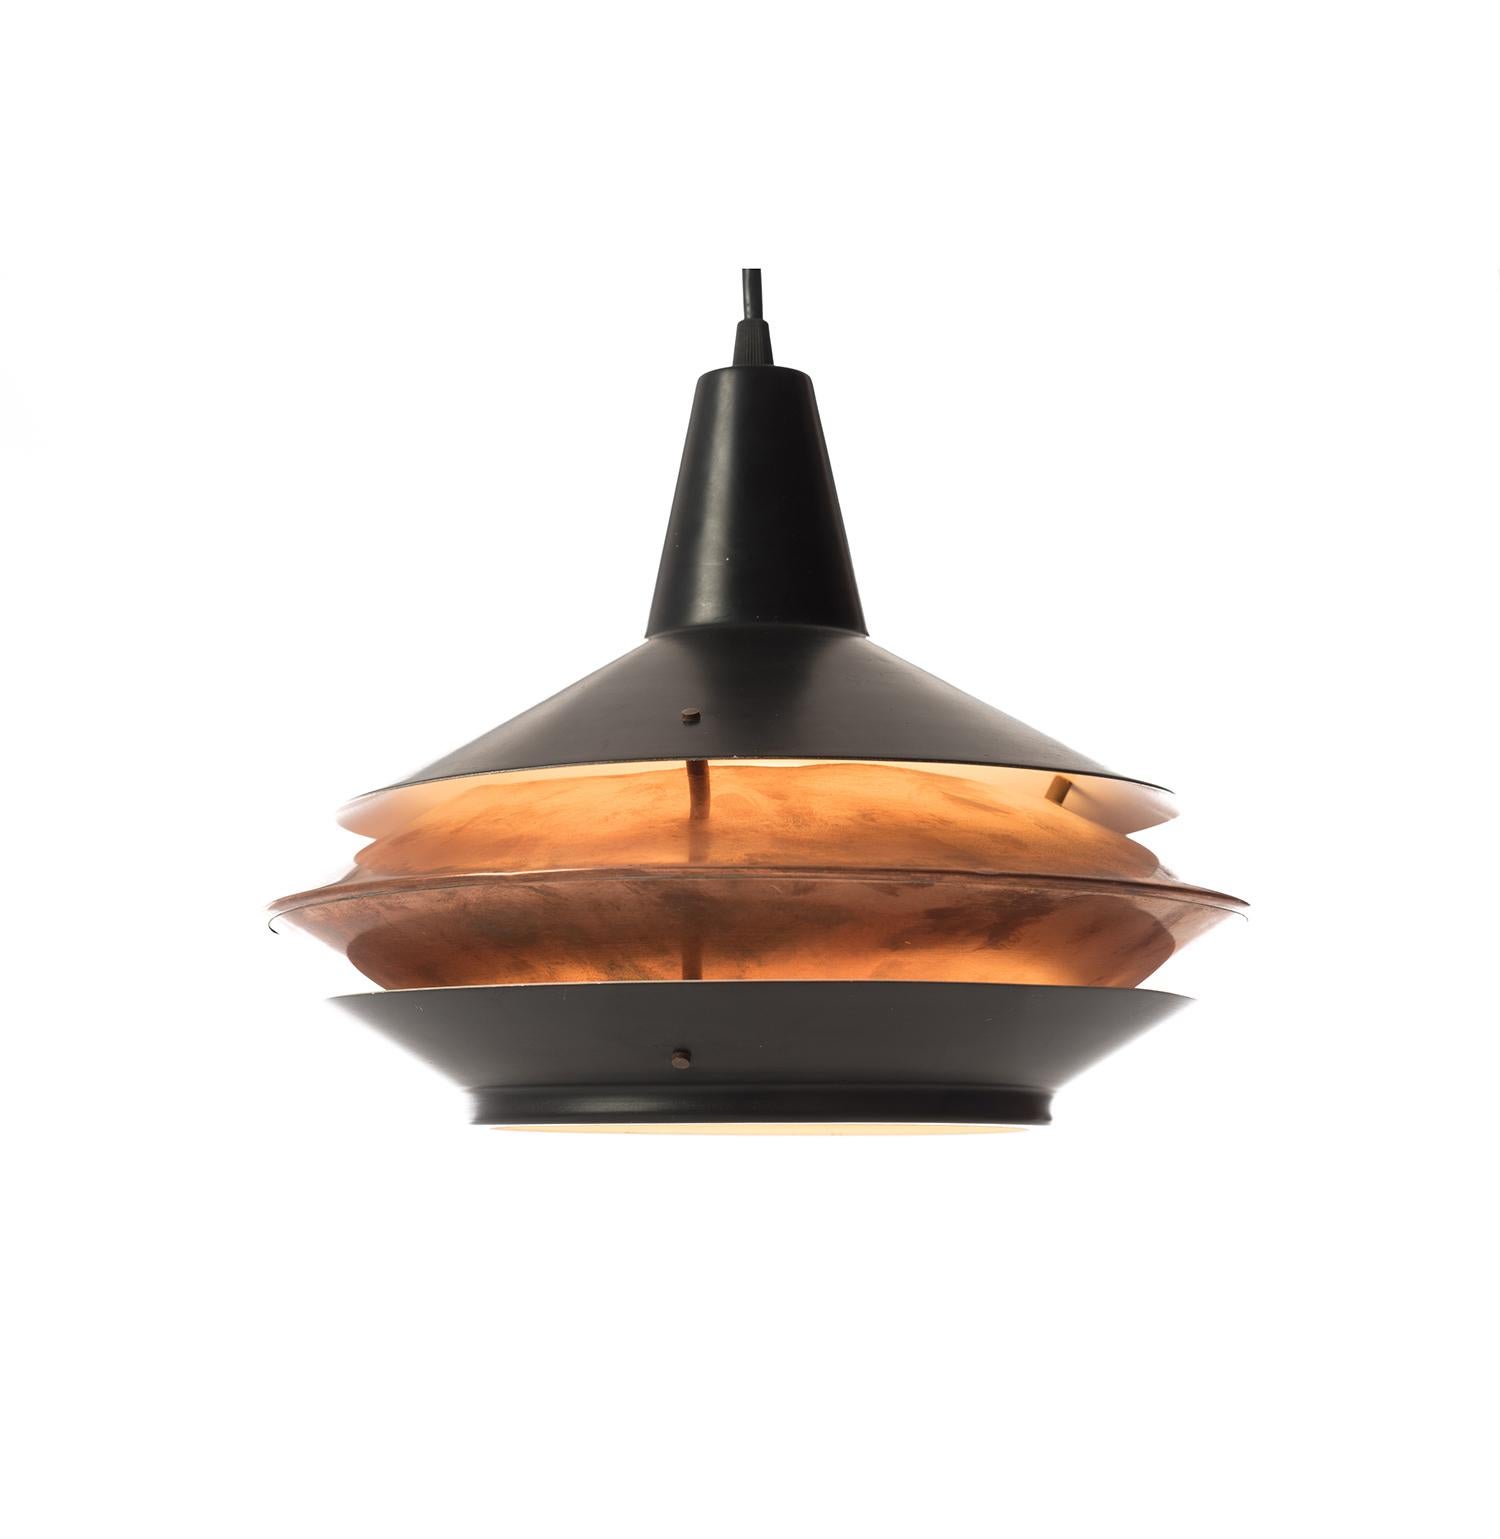 20th Century Scandinavian Modern Vintage Lantern Shaped Pendant Fixture in Black and Copper